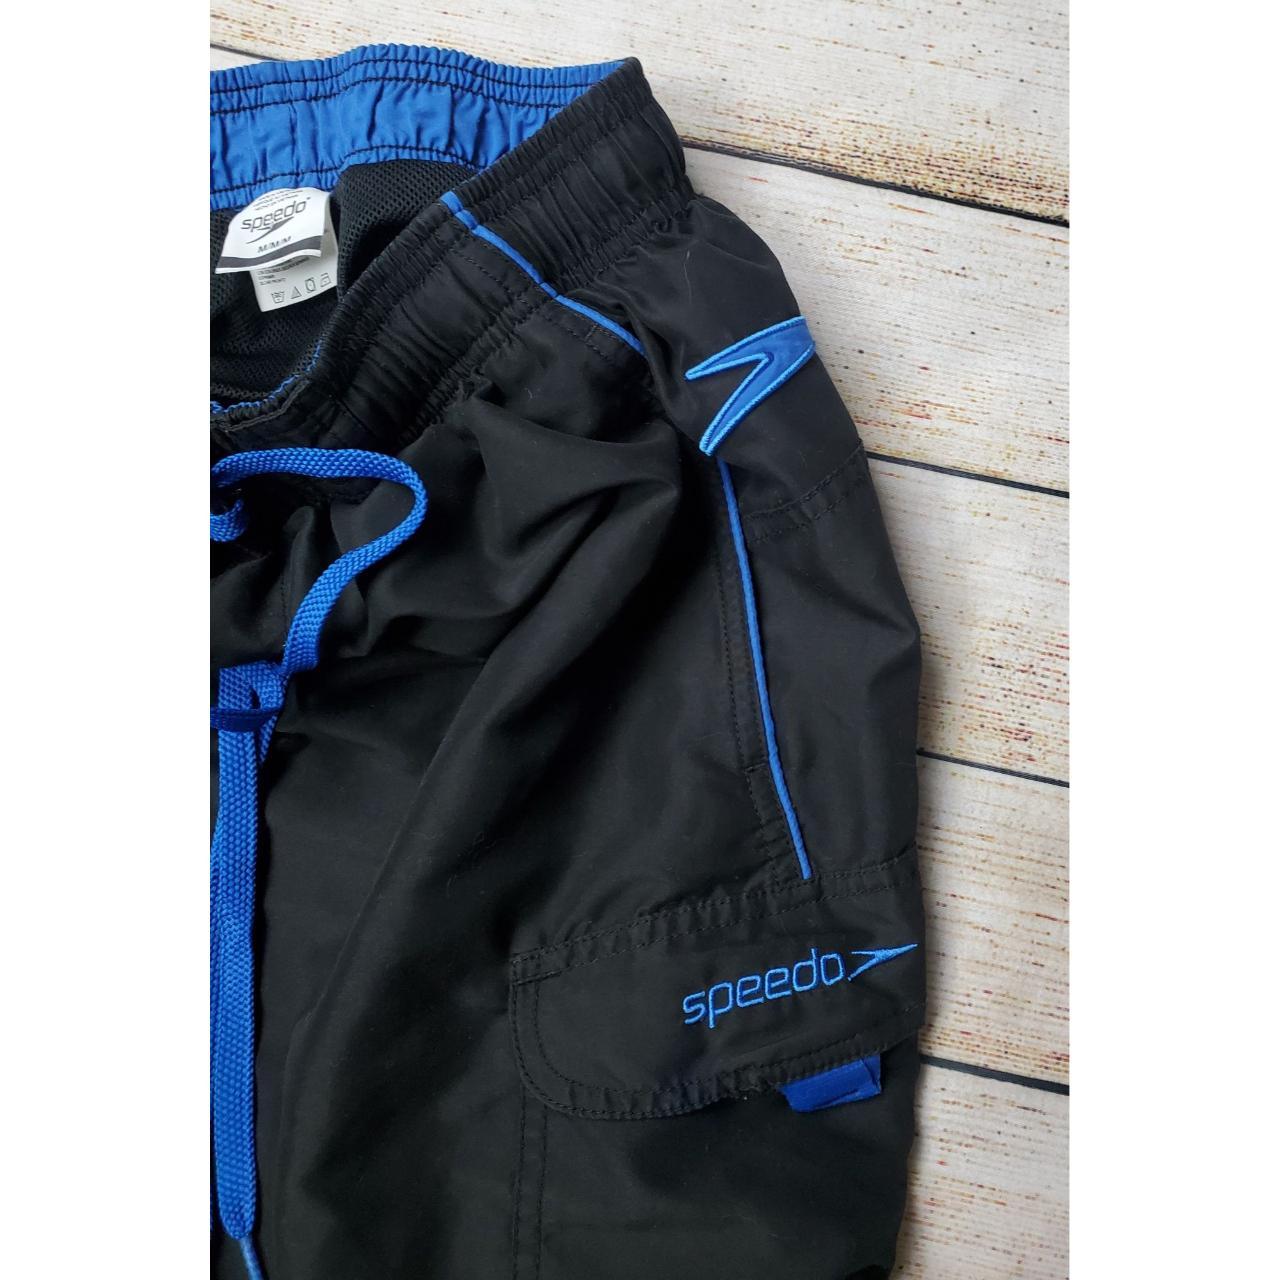 Product Image 3 - Med Speedo Board/Swim Shorts
Waist: 13
Length: